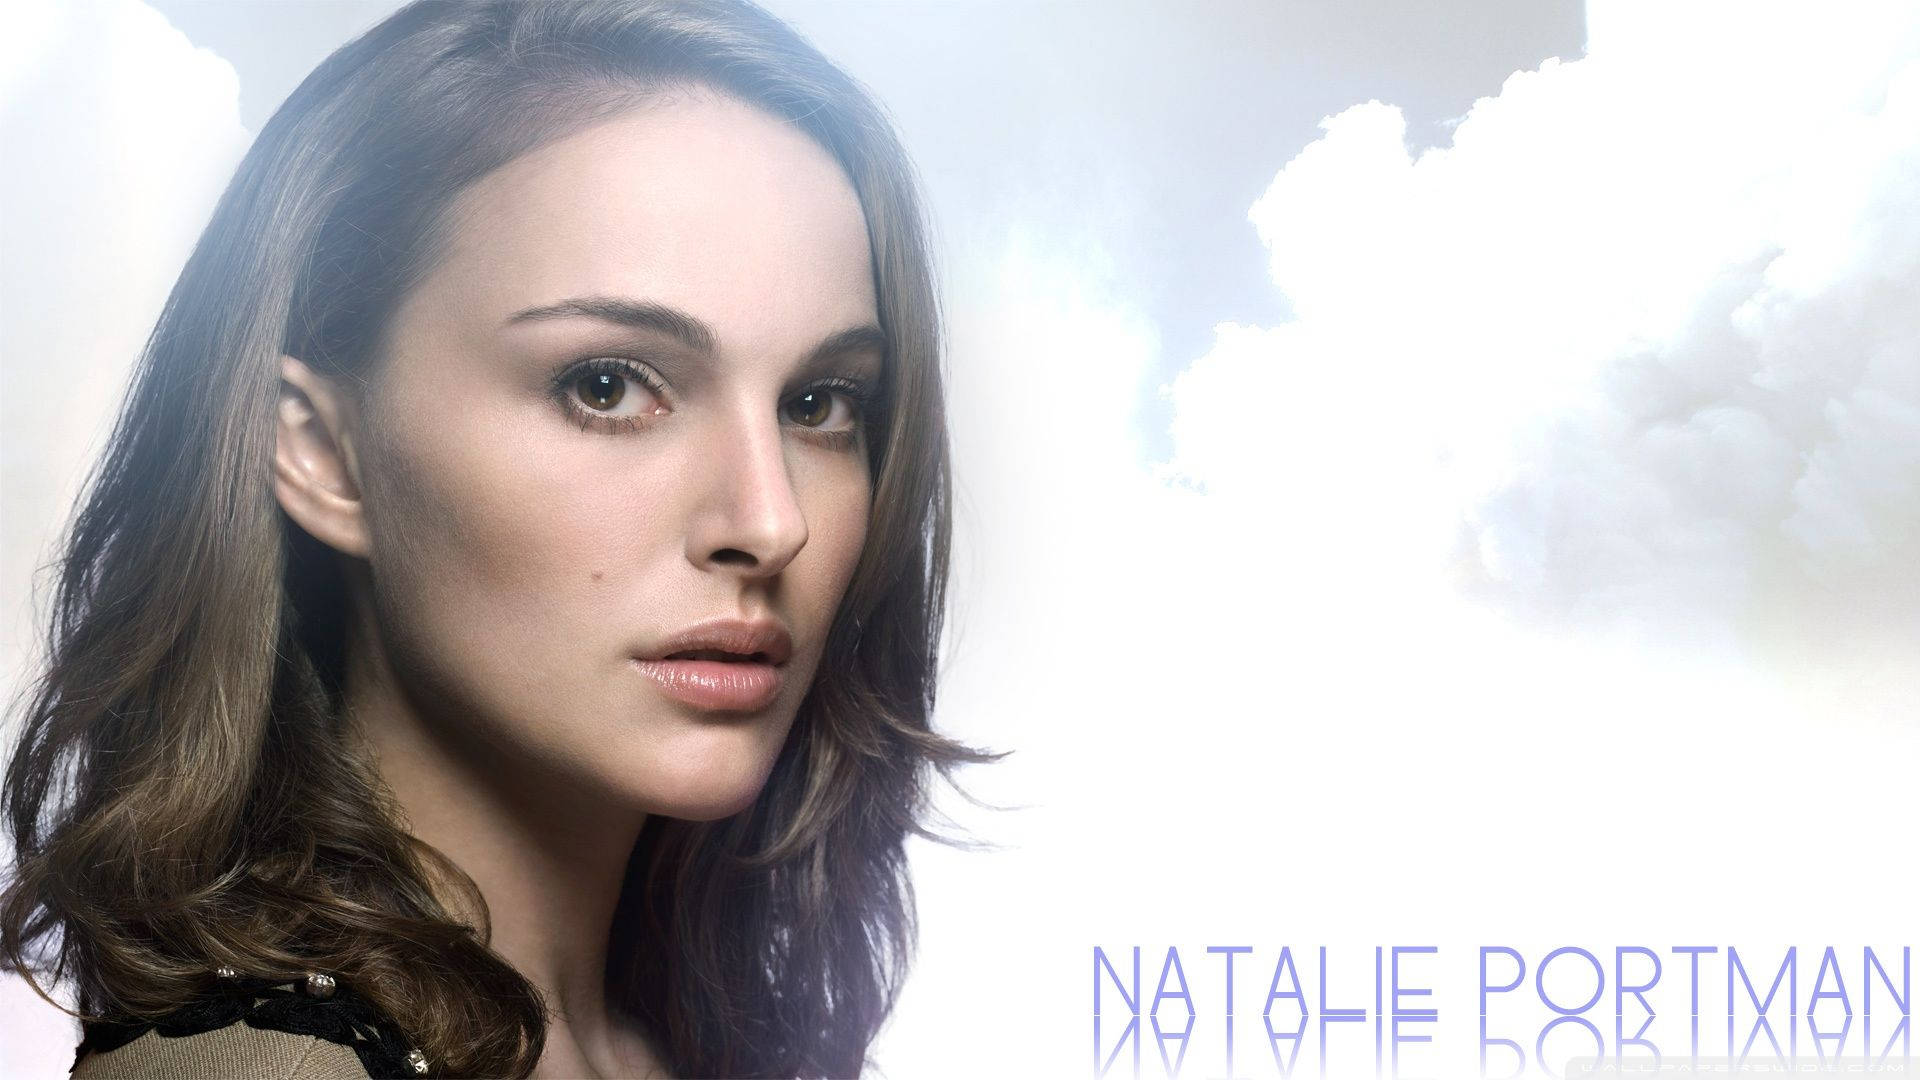 Caption: Natalie Portman Poses Against a Cloudy Background Wallpaper